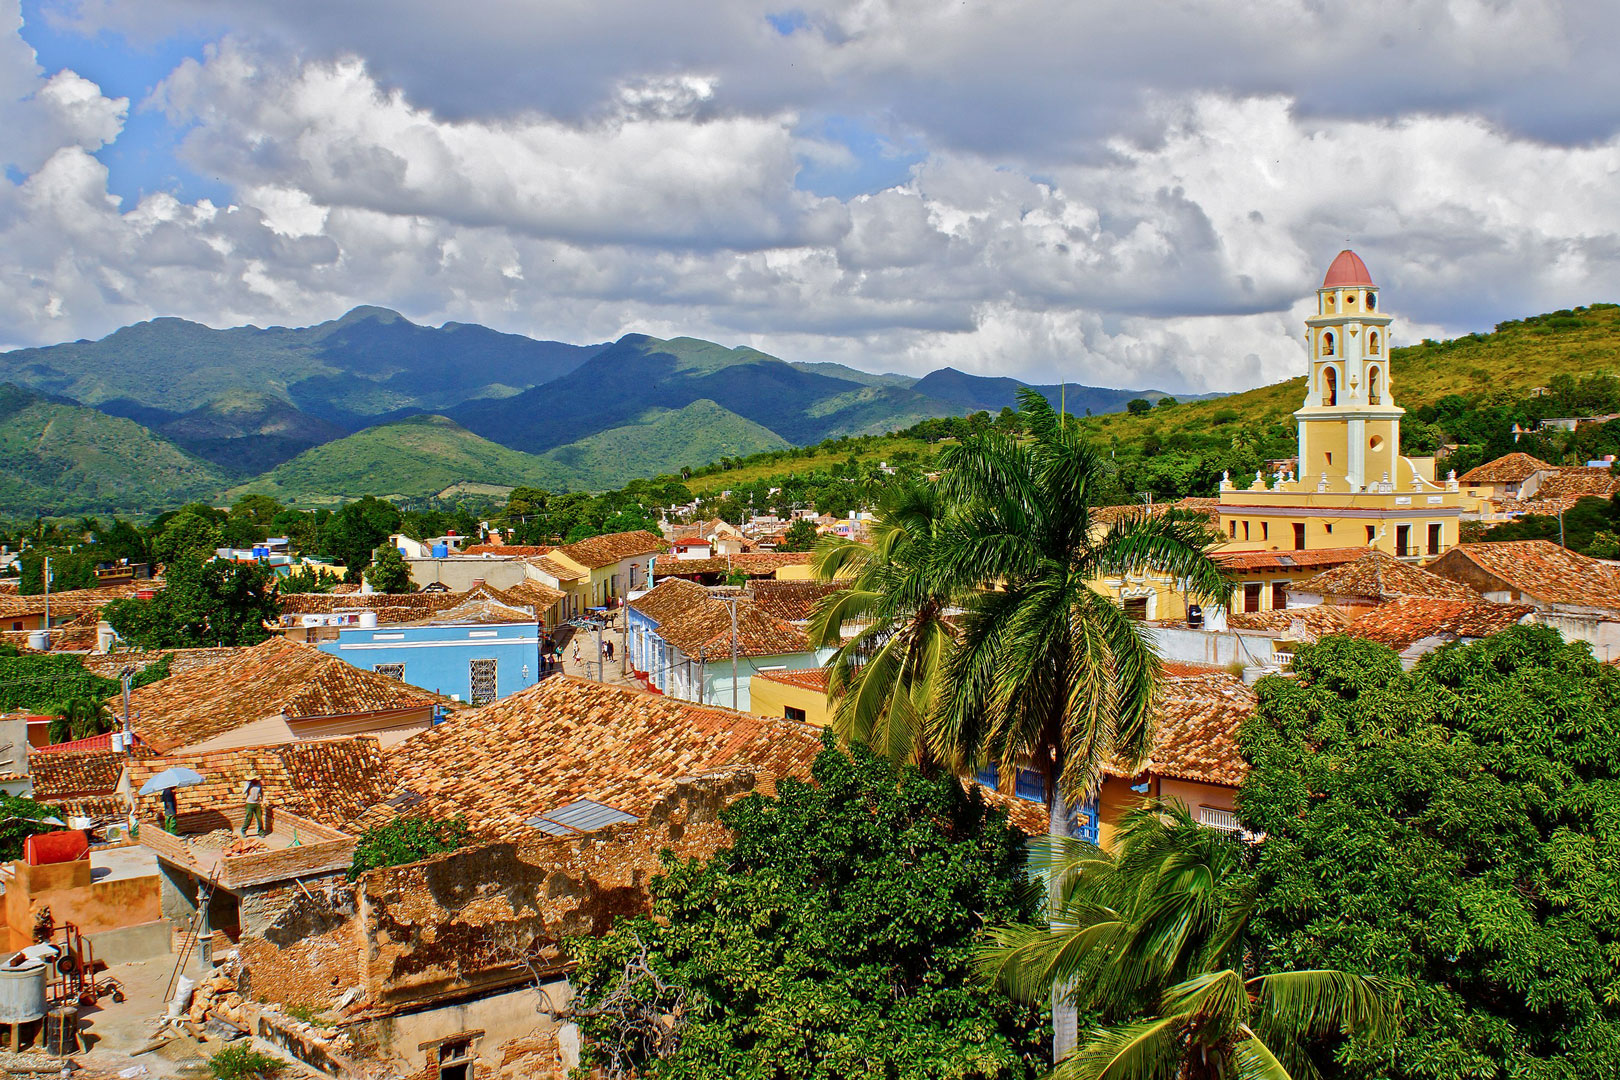 View of Trinidad in Sancti Spíritus province of Cuba.